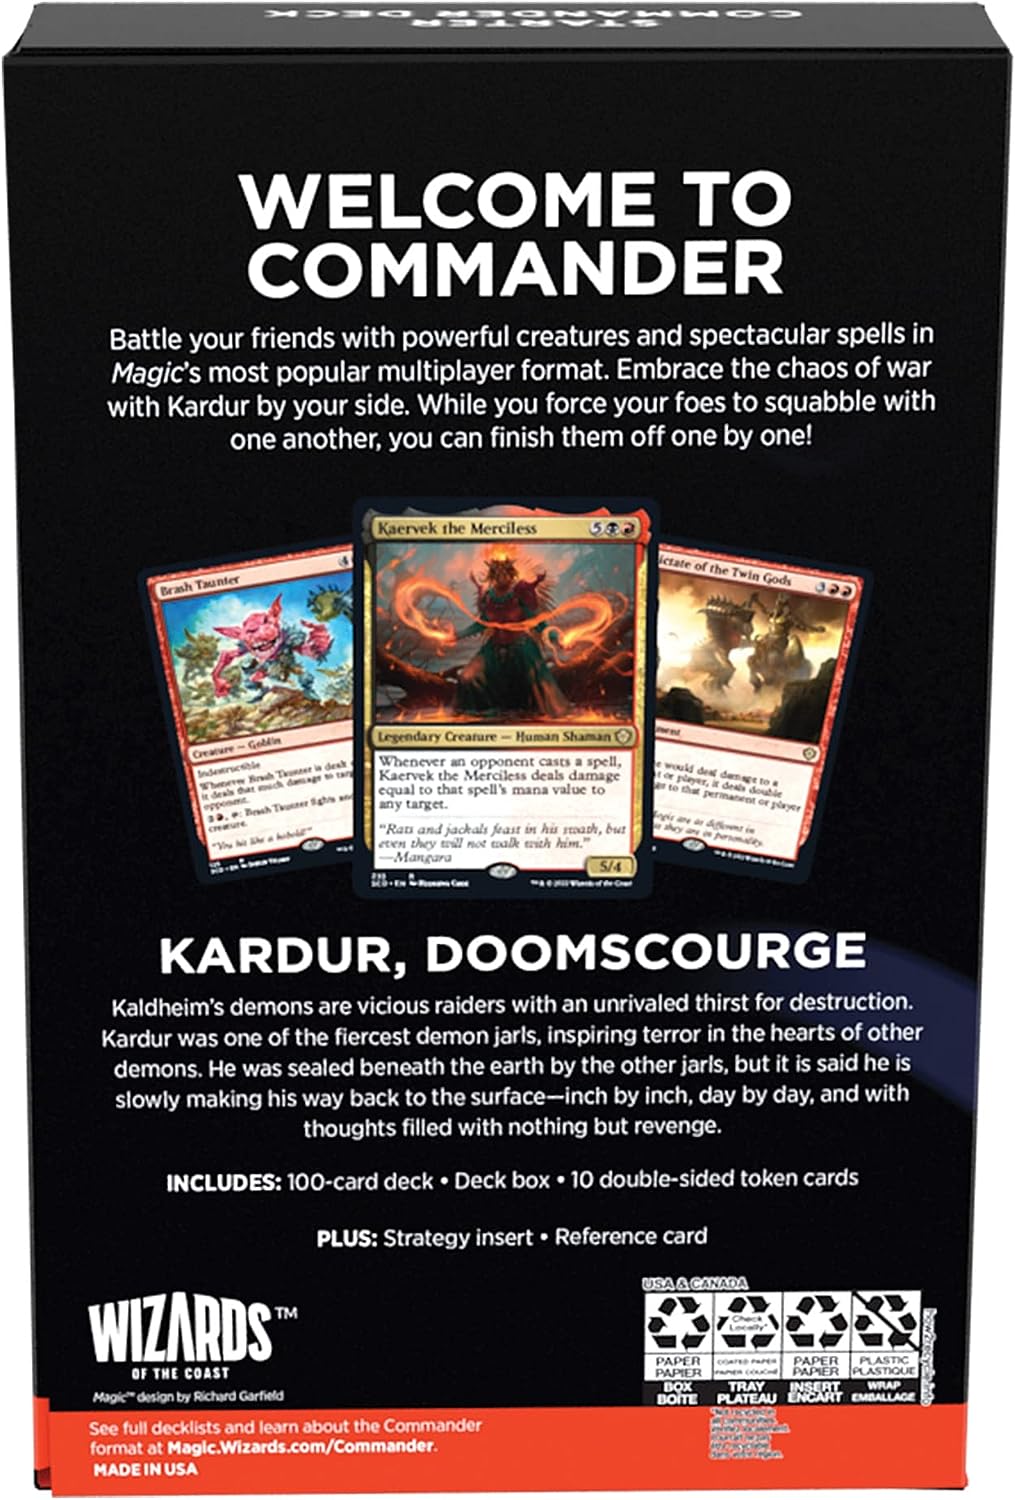 Magic: The Gathering Starter Commander Deck -Kardur, Doomscourge – Chaos Incarnate